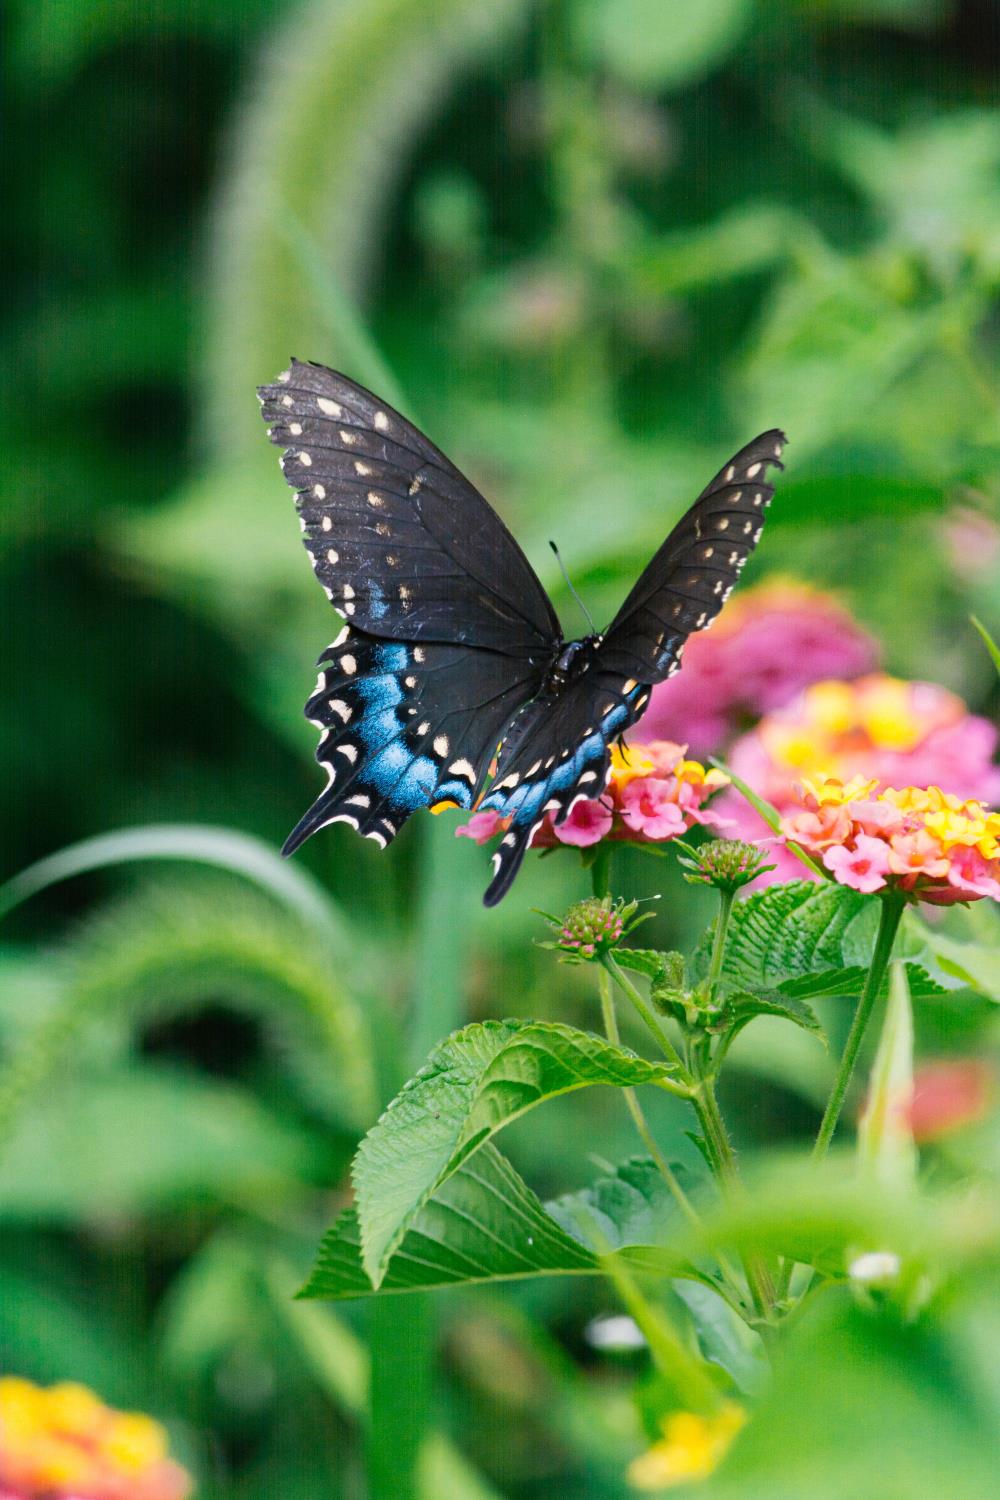  Black butterfly Swallowtail Butterfly sitting on flowers